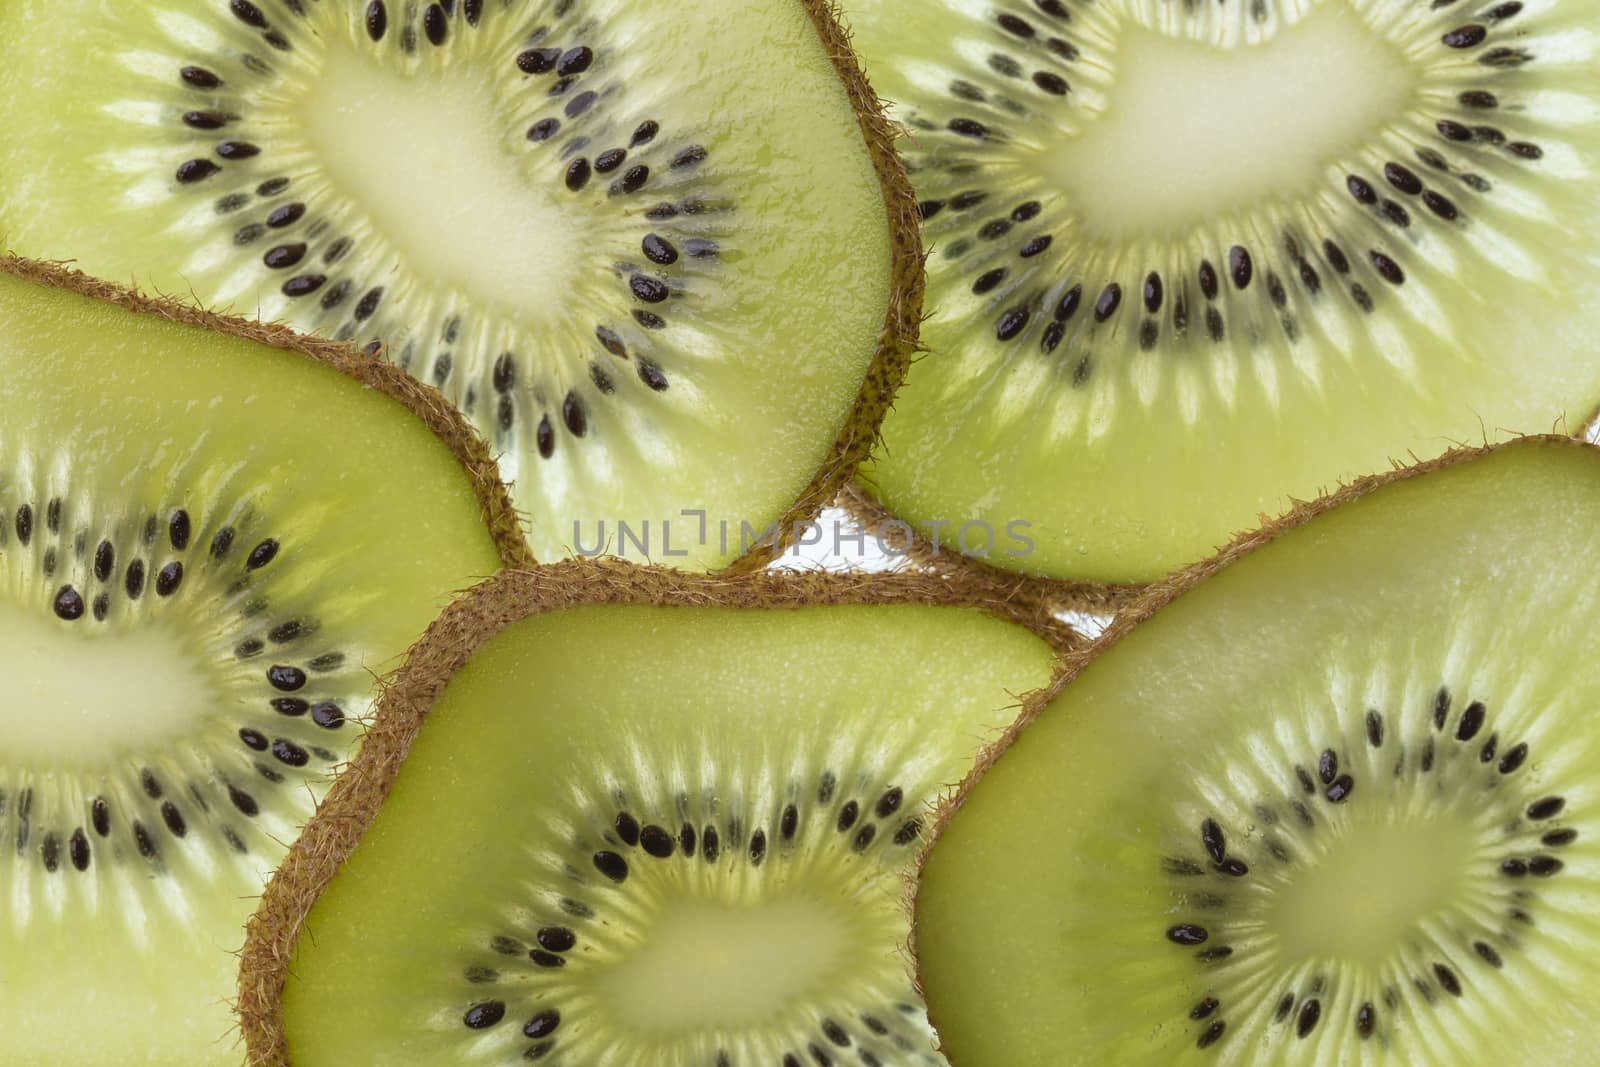 Several slices of a cut kiwi fruit in backlight foto shot by Tofotografie